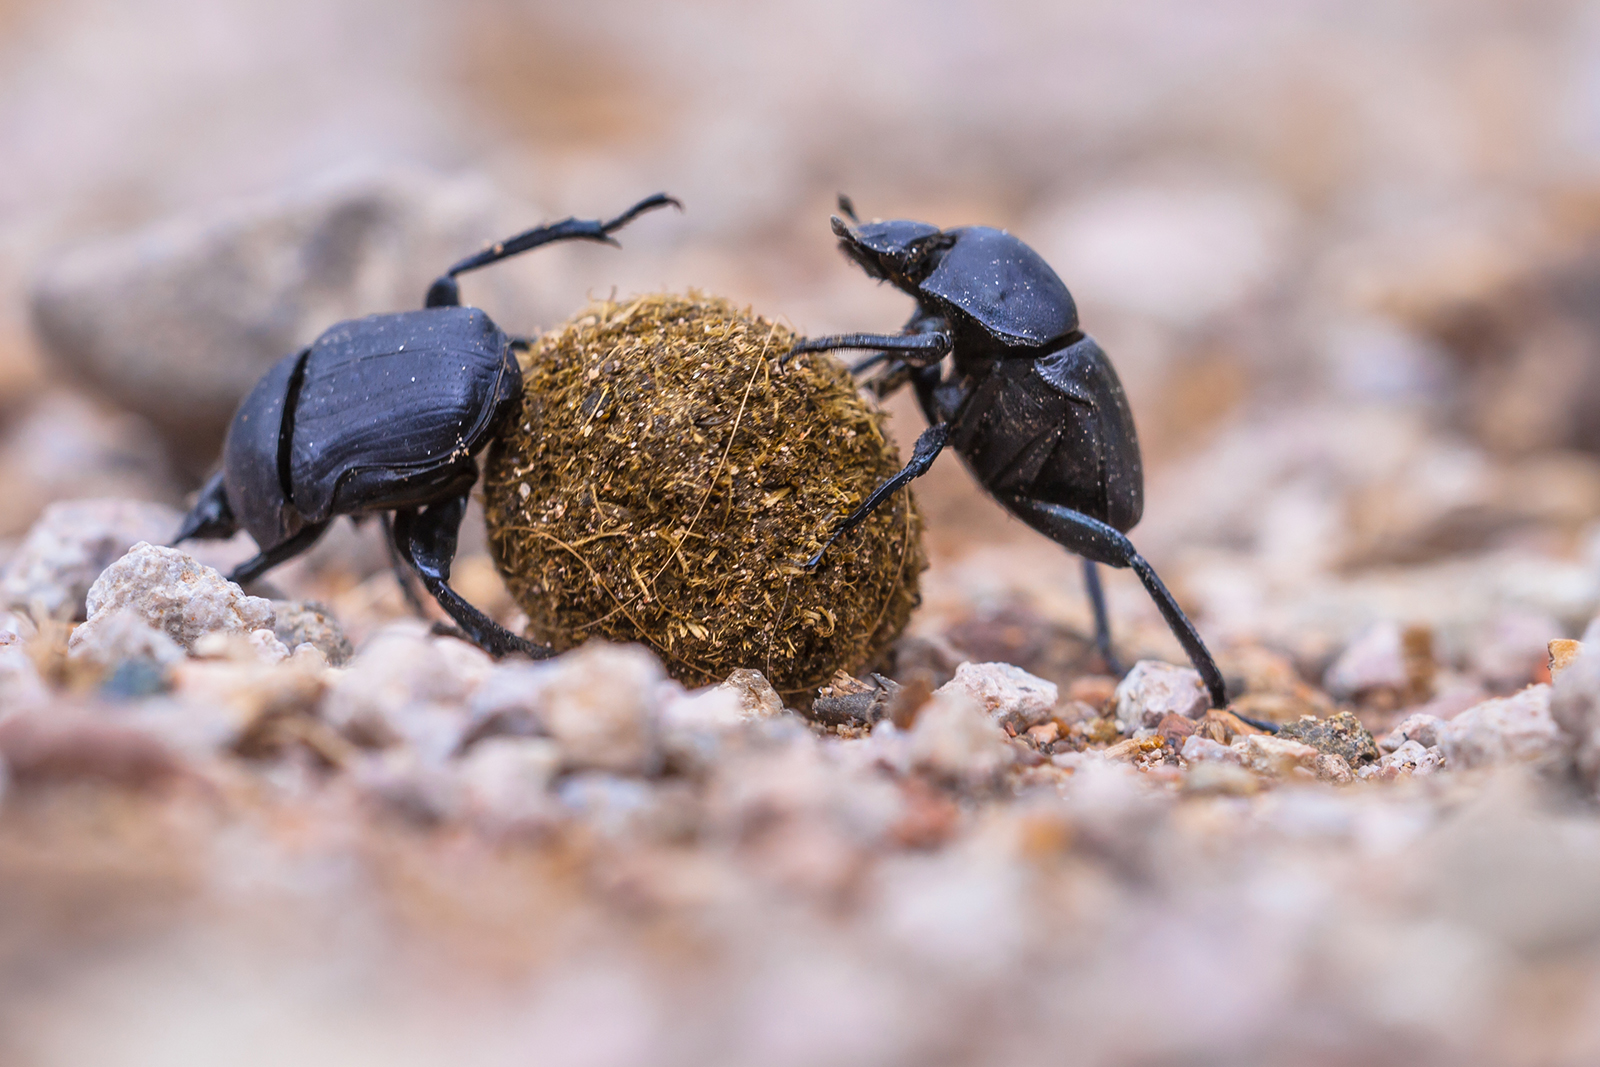 Where do beetles live?